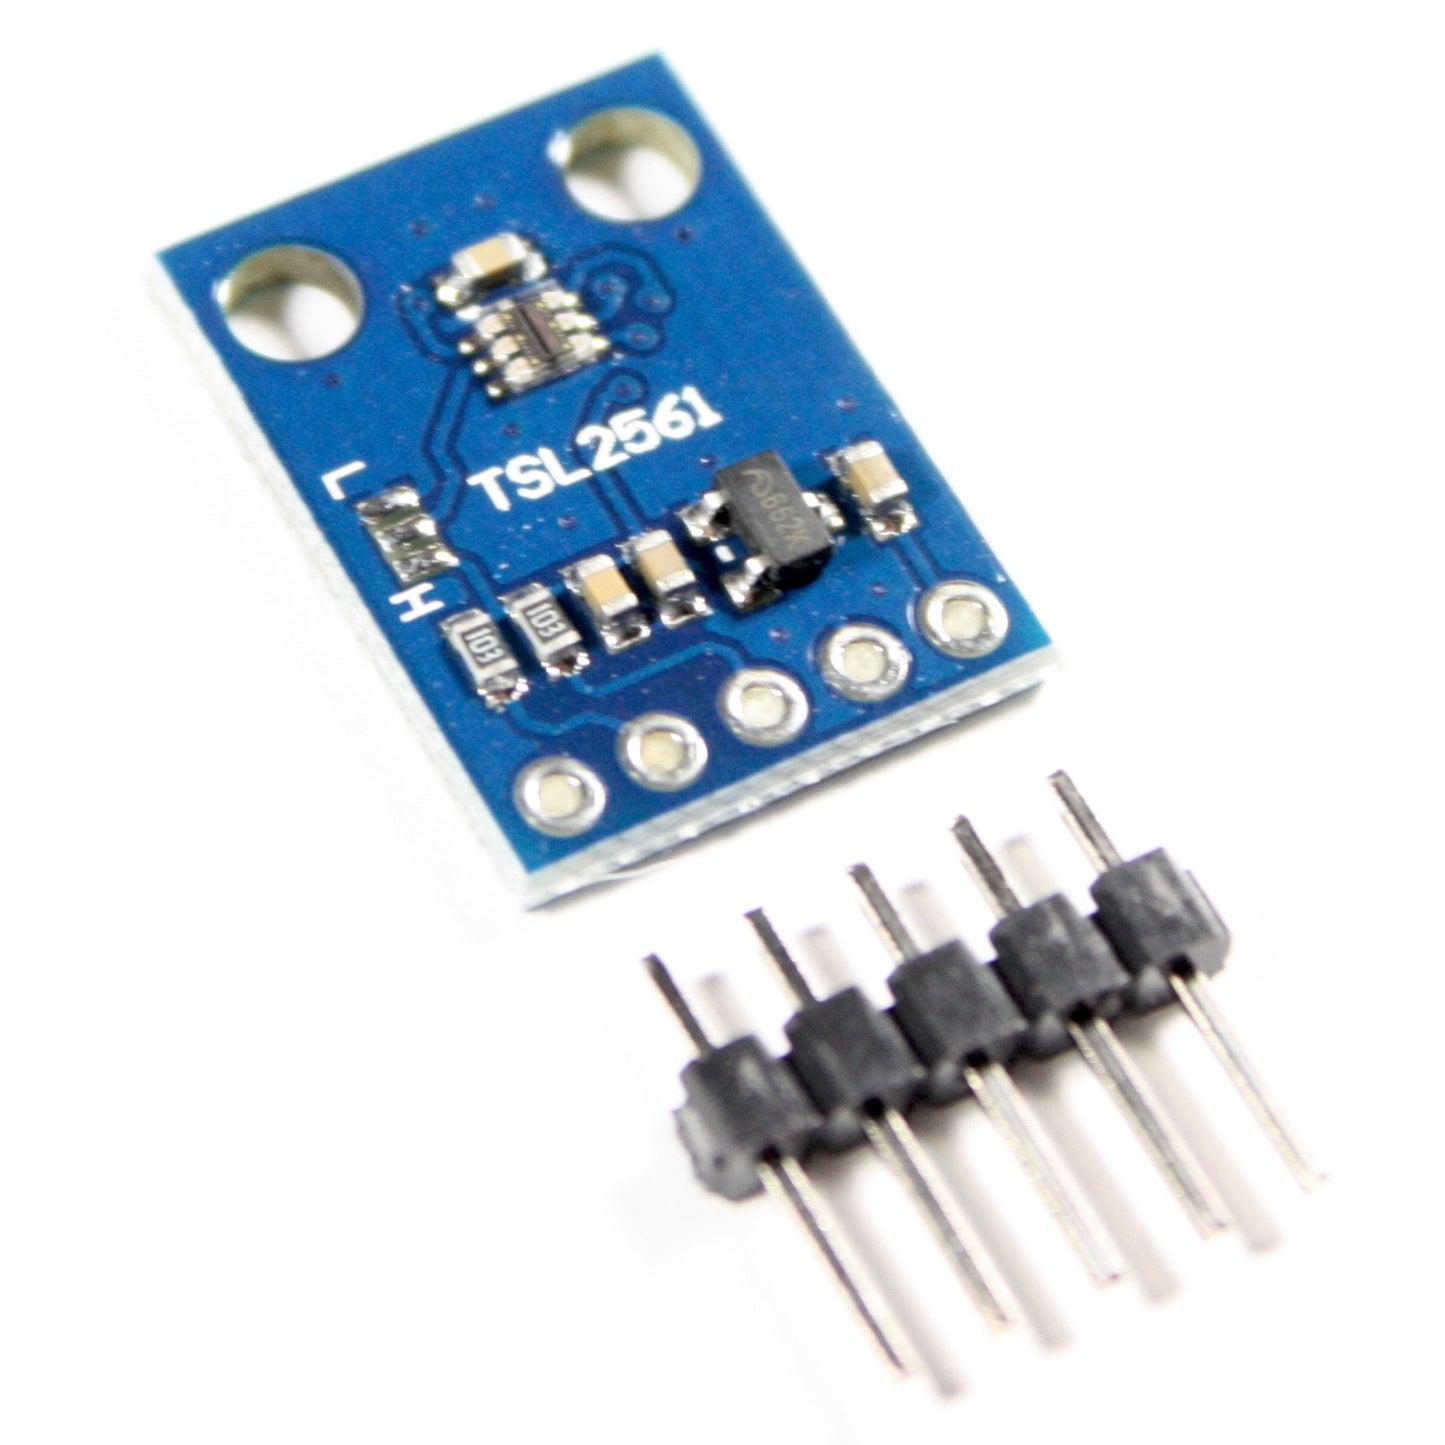 TSL2561 Light Sensor Module, I2C